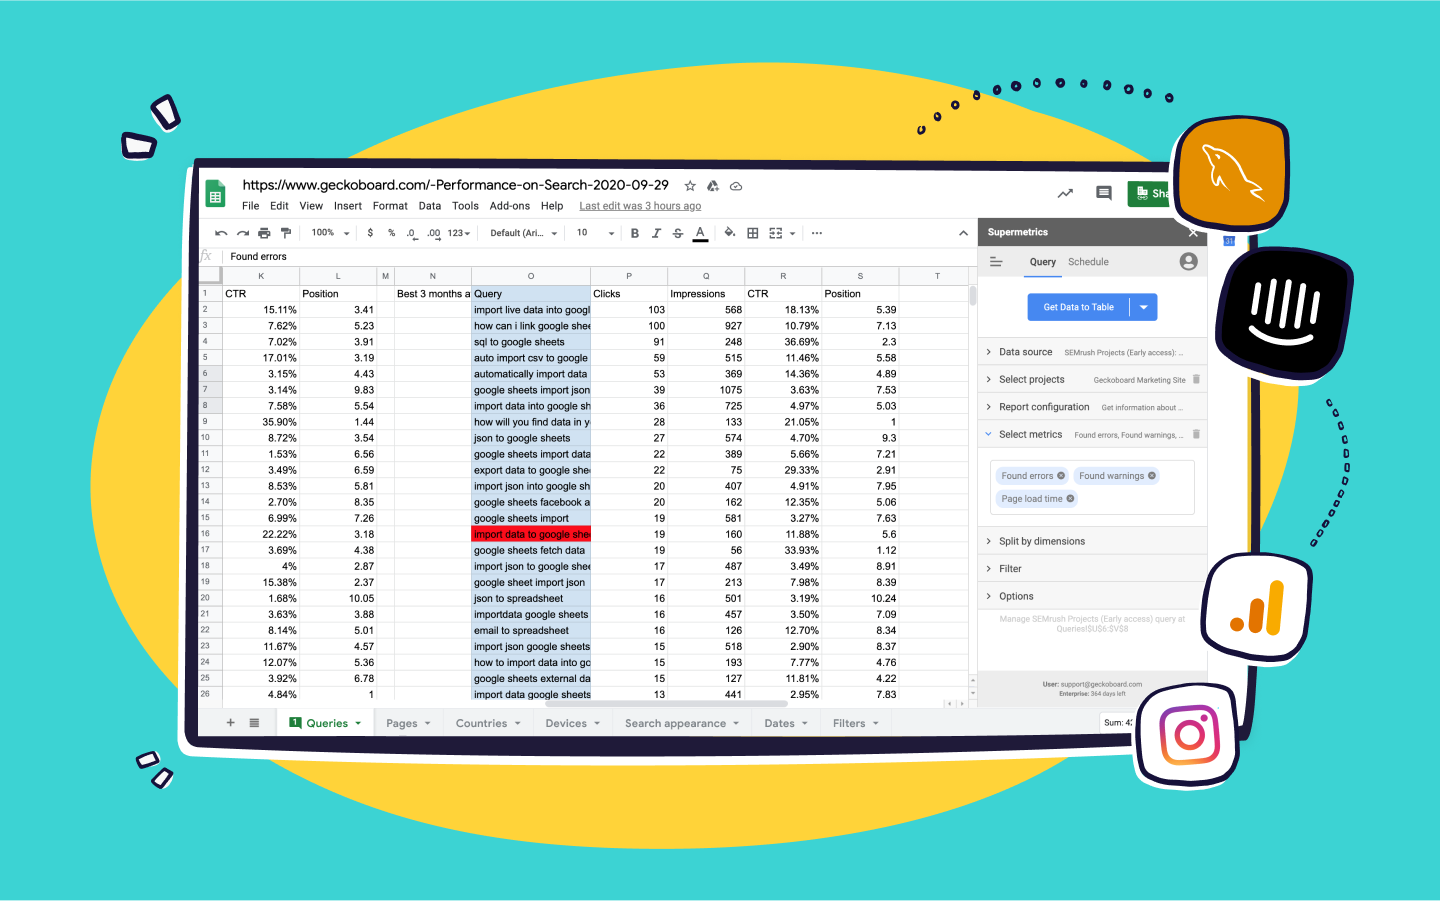 Free Online Spreadsheet Software: Excel